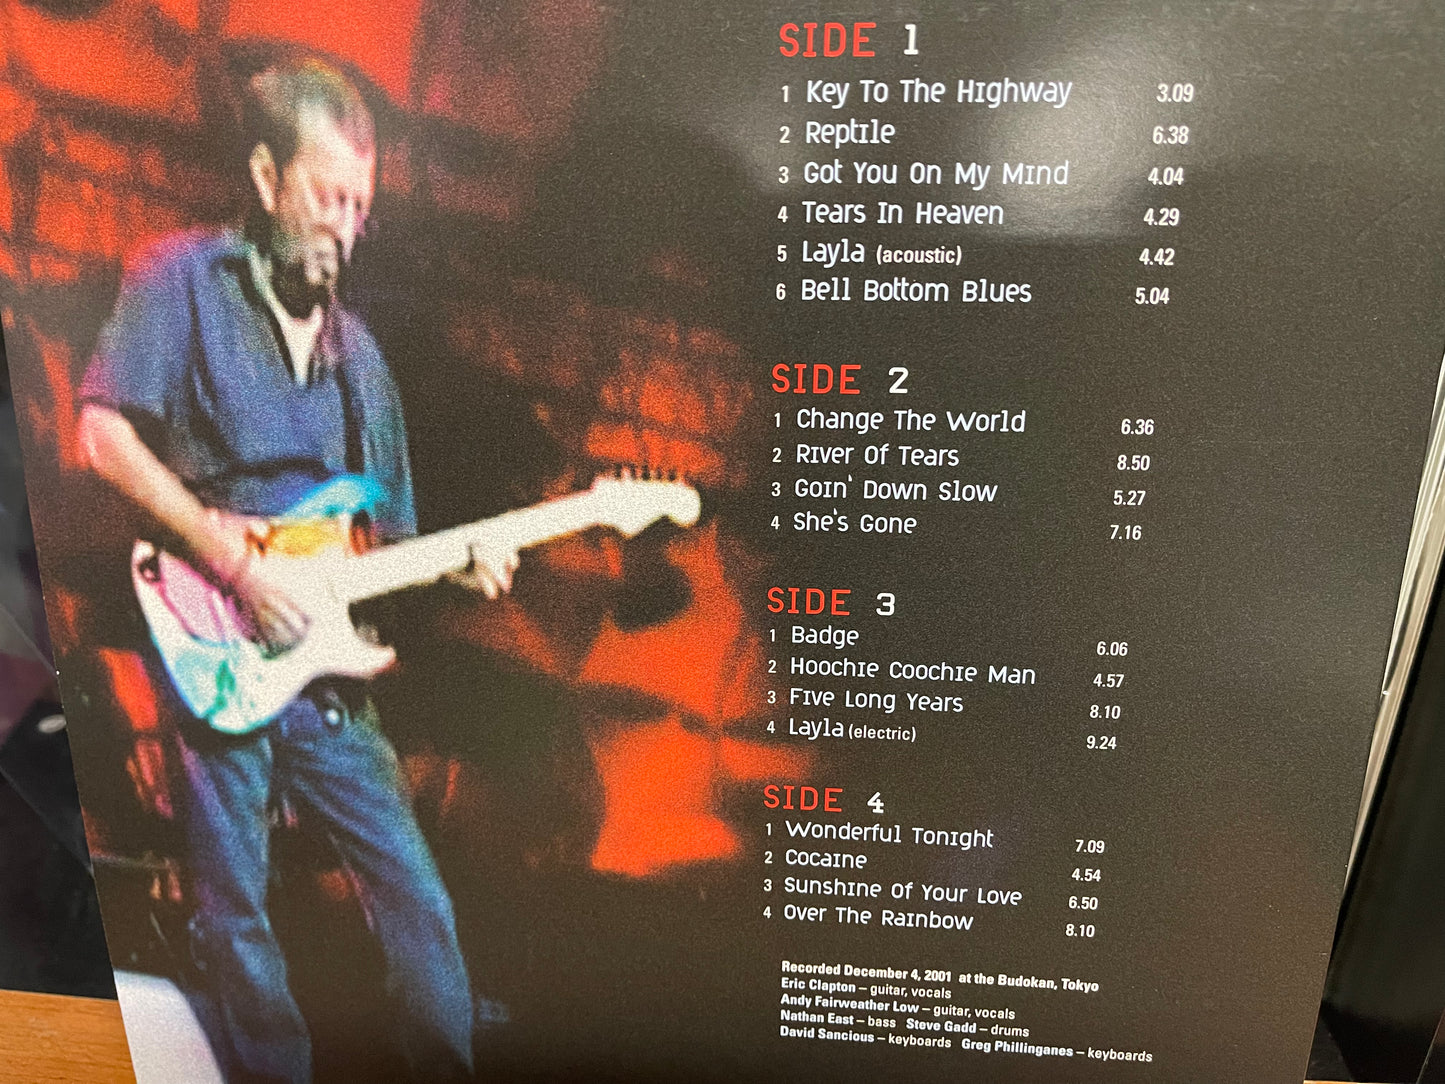 Eric Clapton - Live at Budokan (2010 EU U/O PRESS)